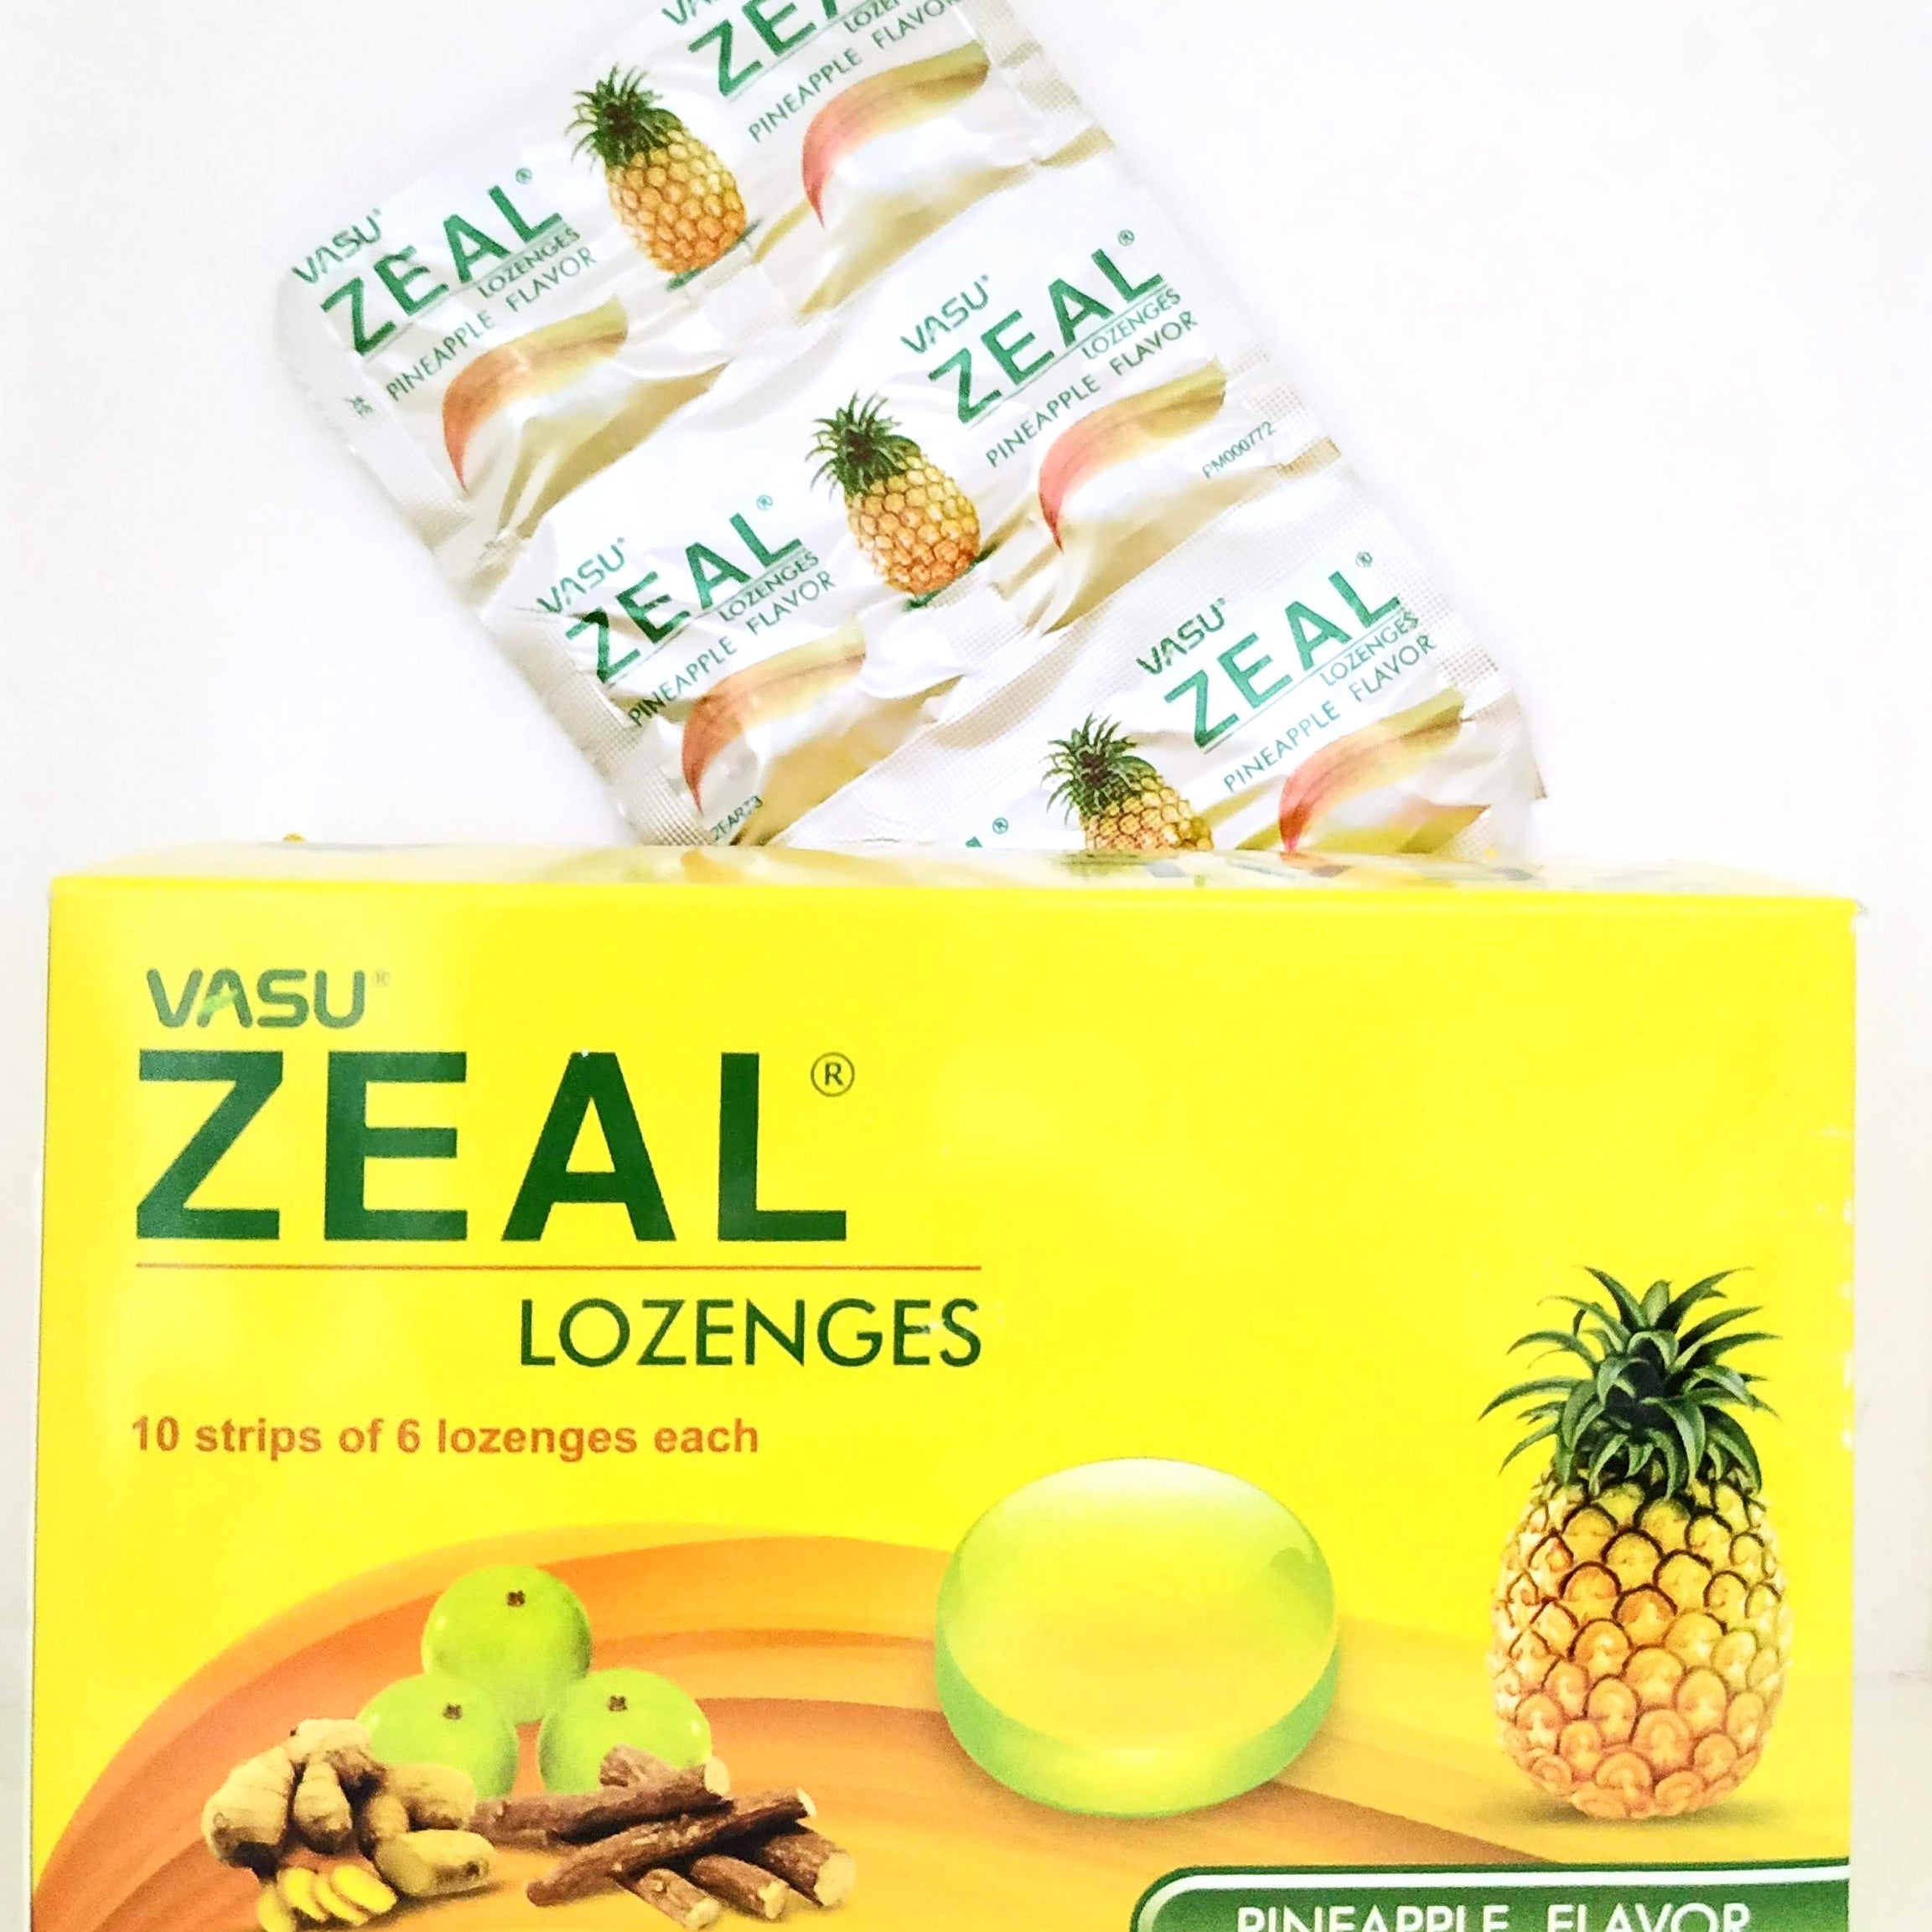 Shop Zeal lozenges - 6lozenges at price 30.00 from Vasu herbals Online - Ayush Care